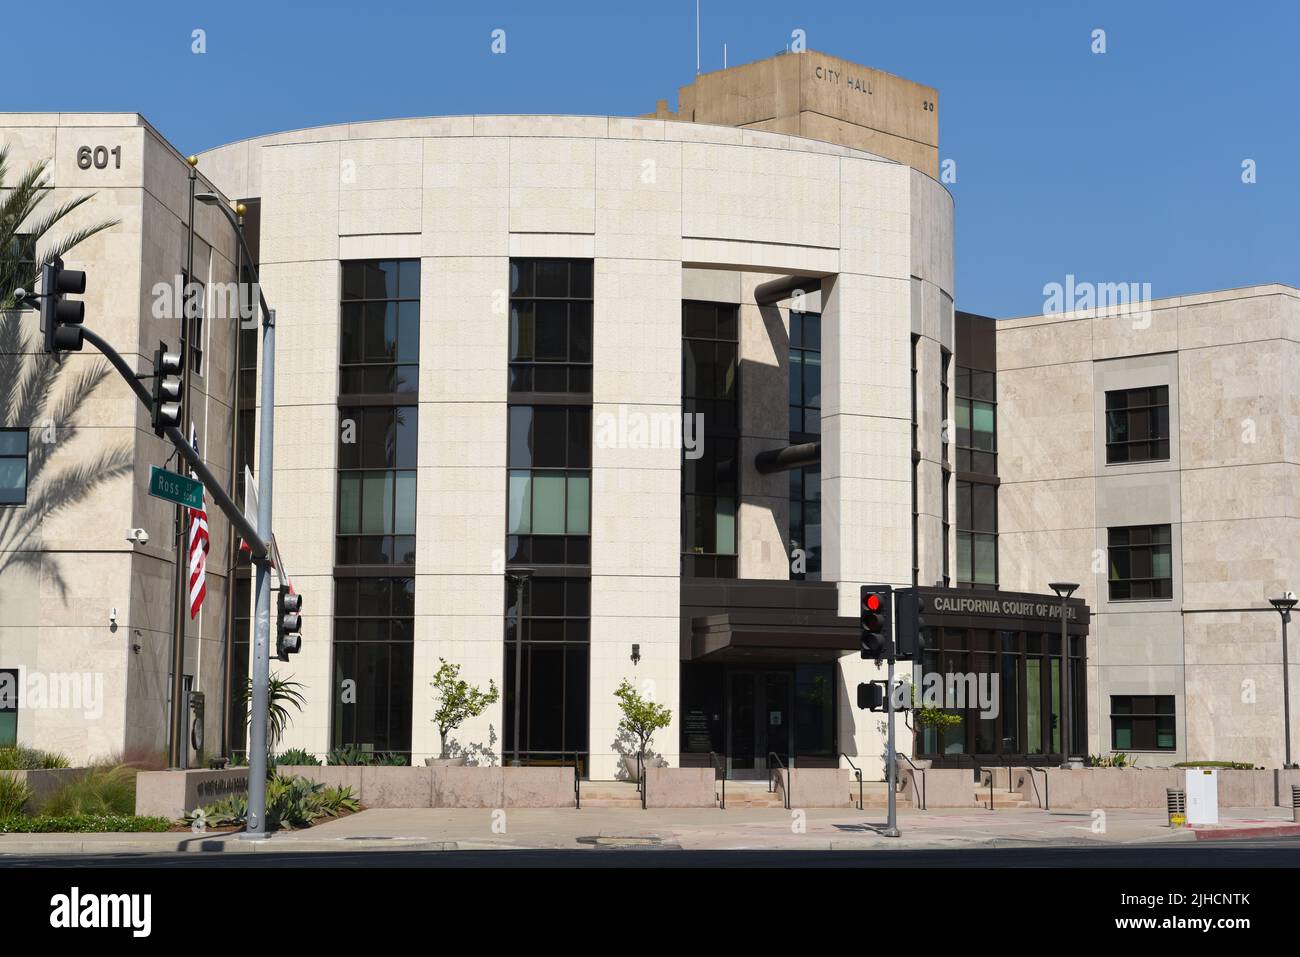 SANTA ANA, CALIFORNIA - 23 SEPT 2020: The California Court of Appeal building in Santa Ana. Stock Photo